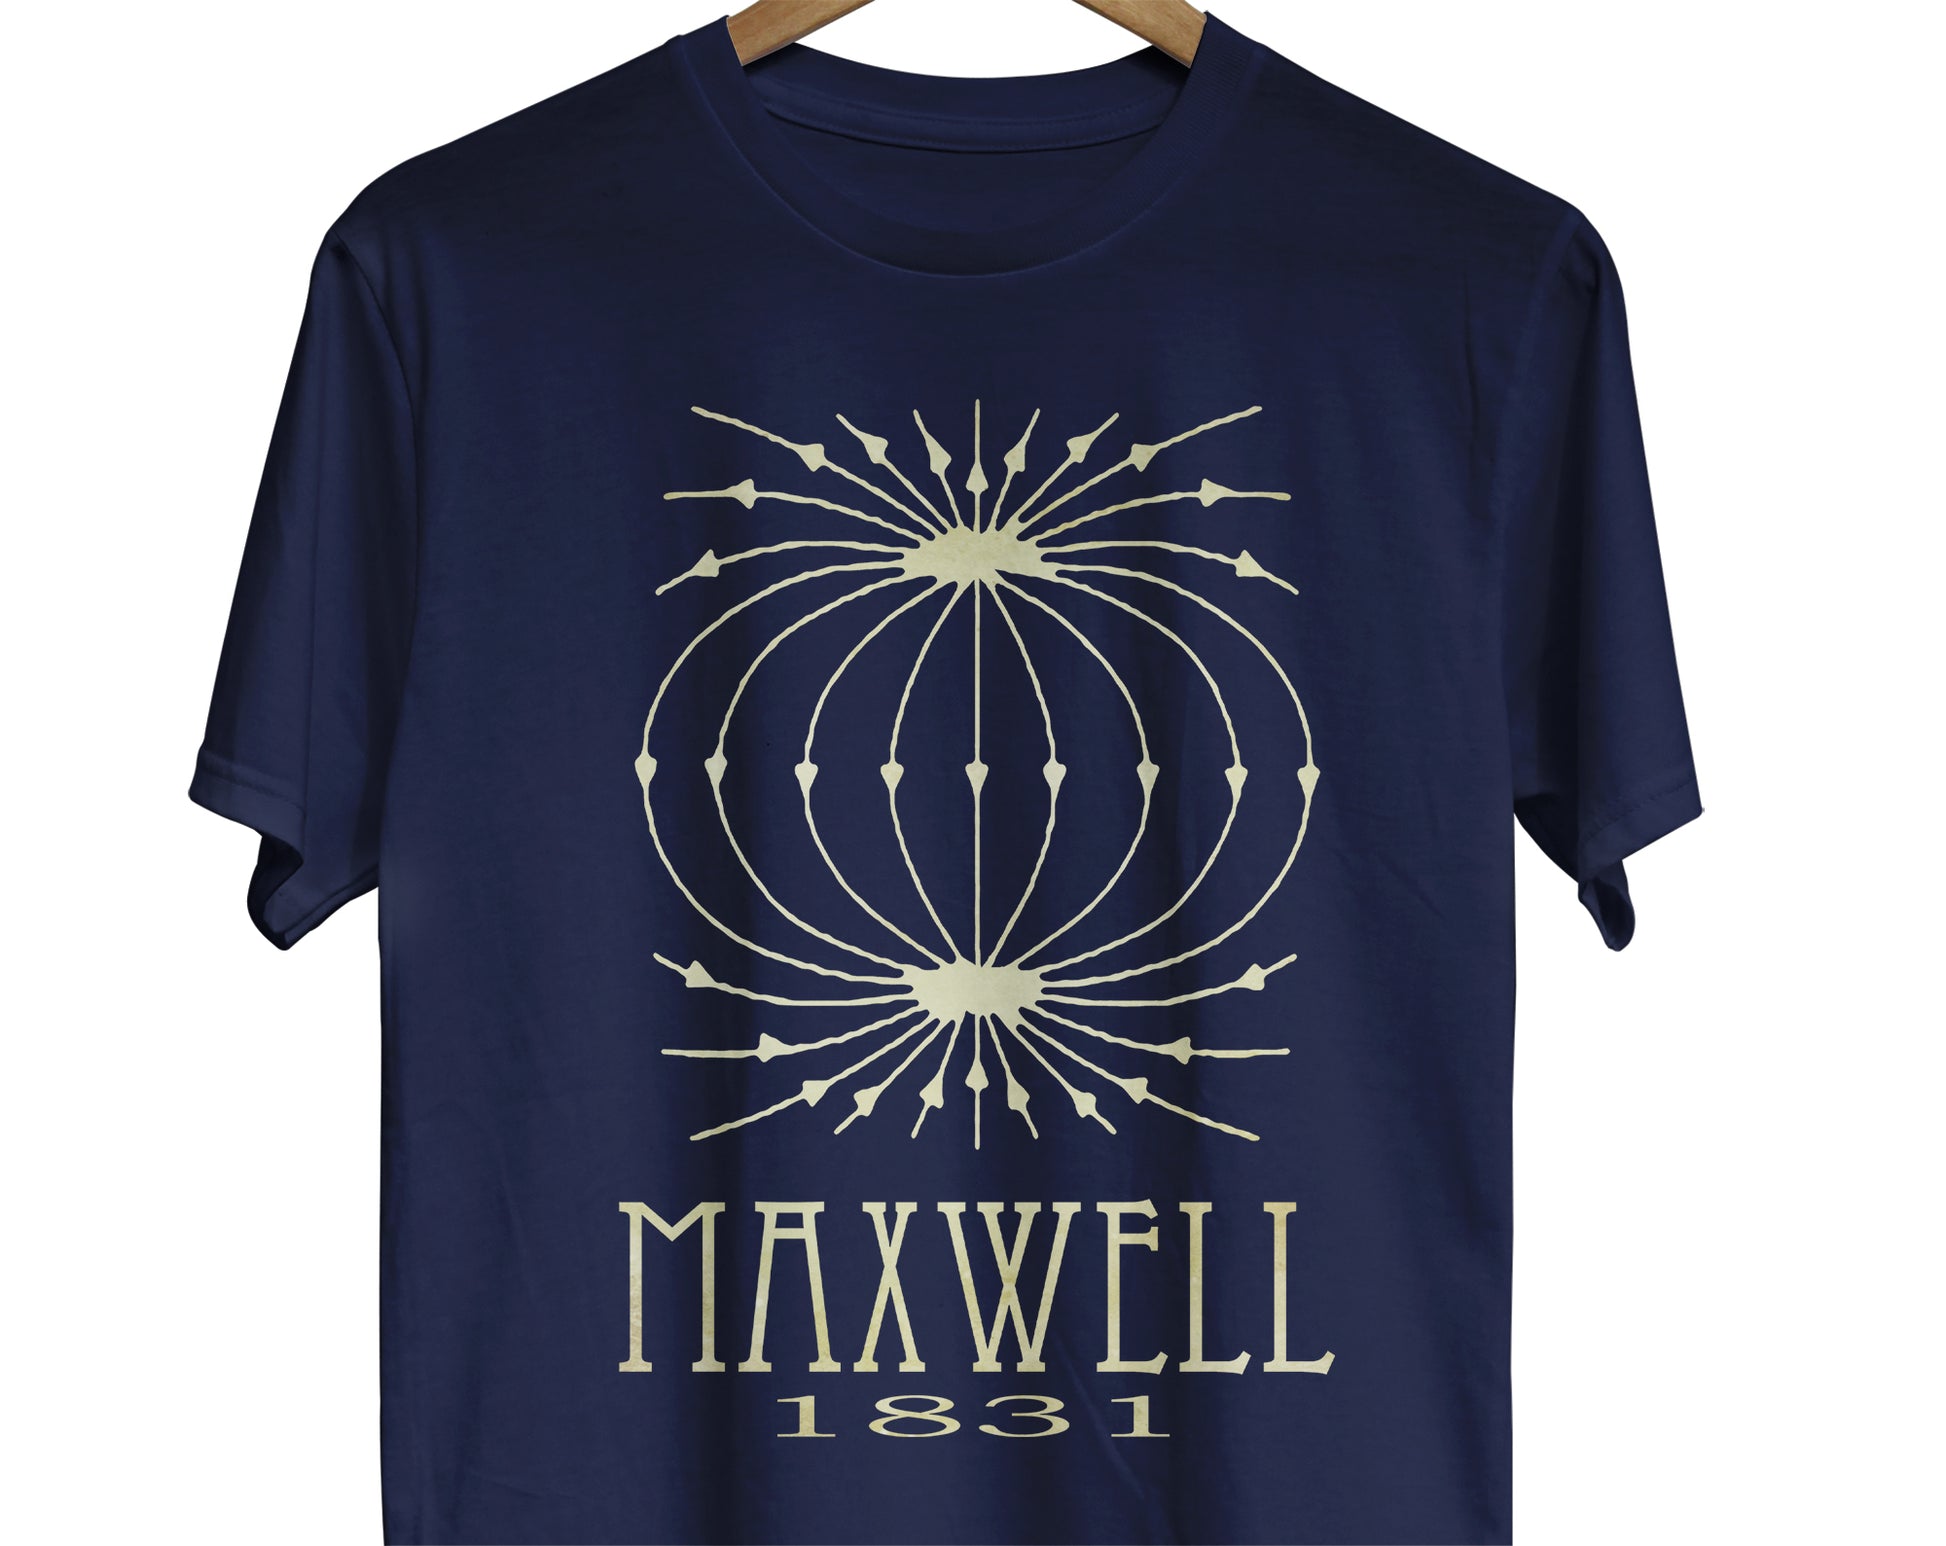 James Maxwell physics t-shirt for science teacher